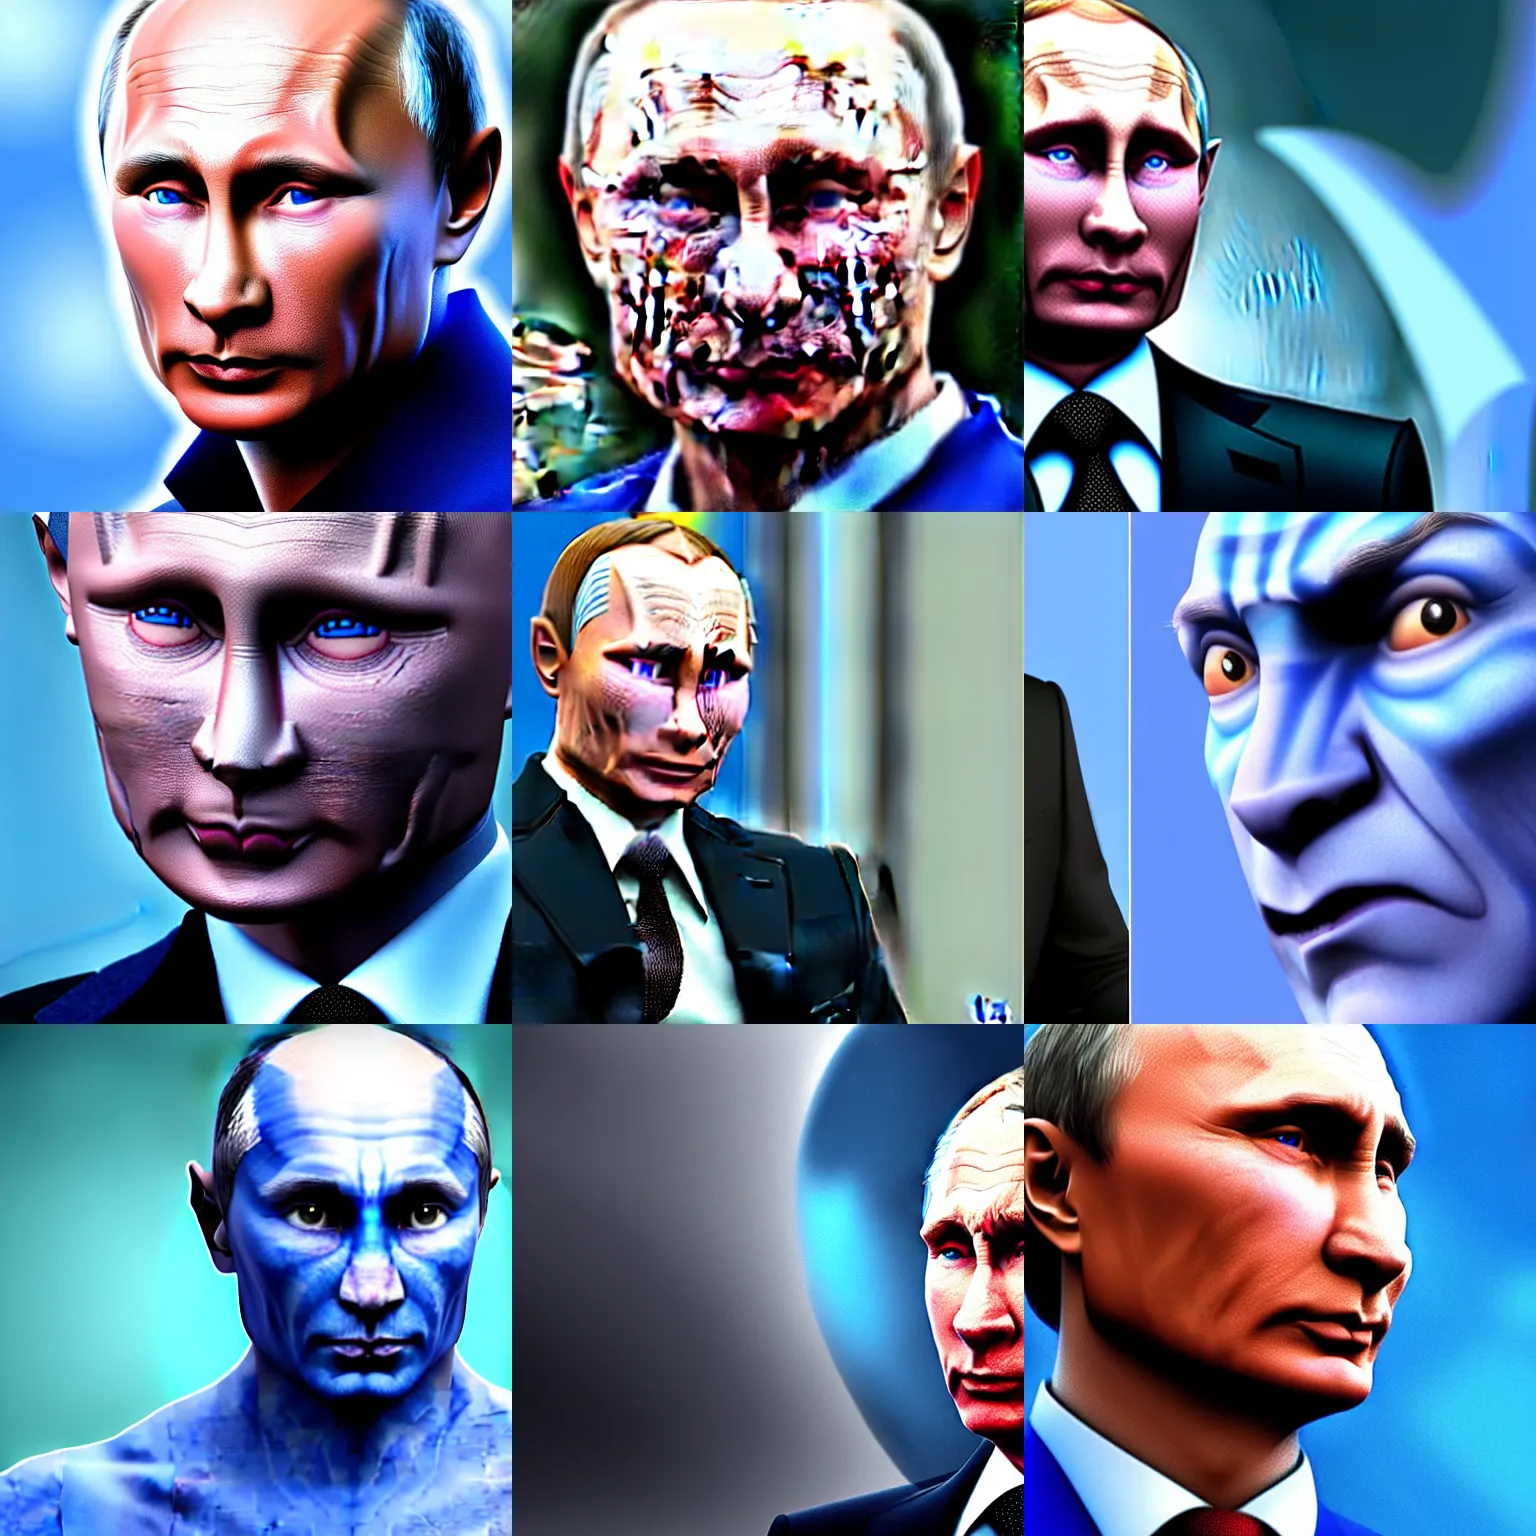 Prompt: Vladimir Putin as avatar 4K quality super realistic